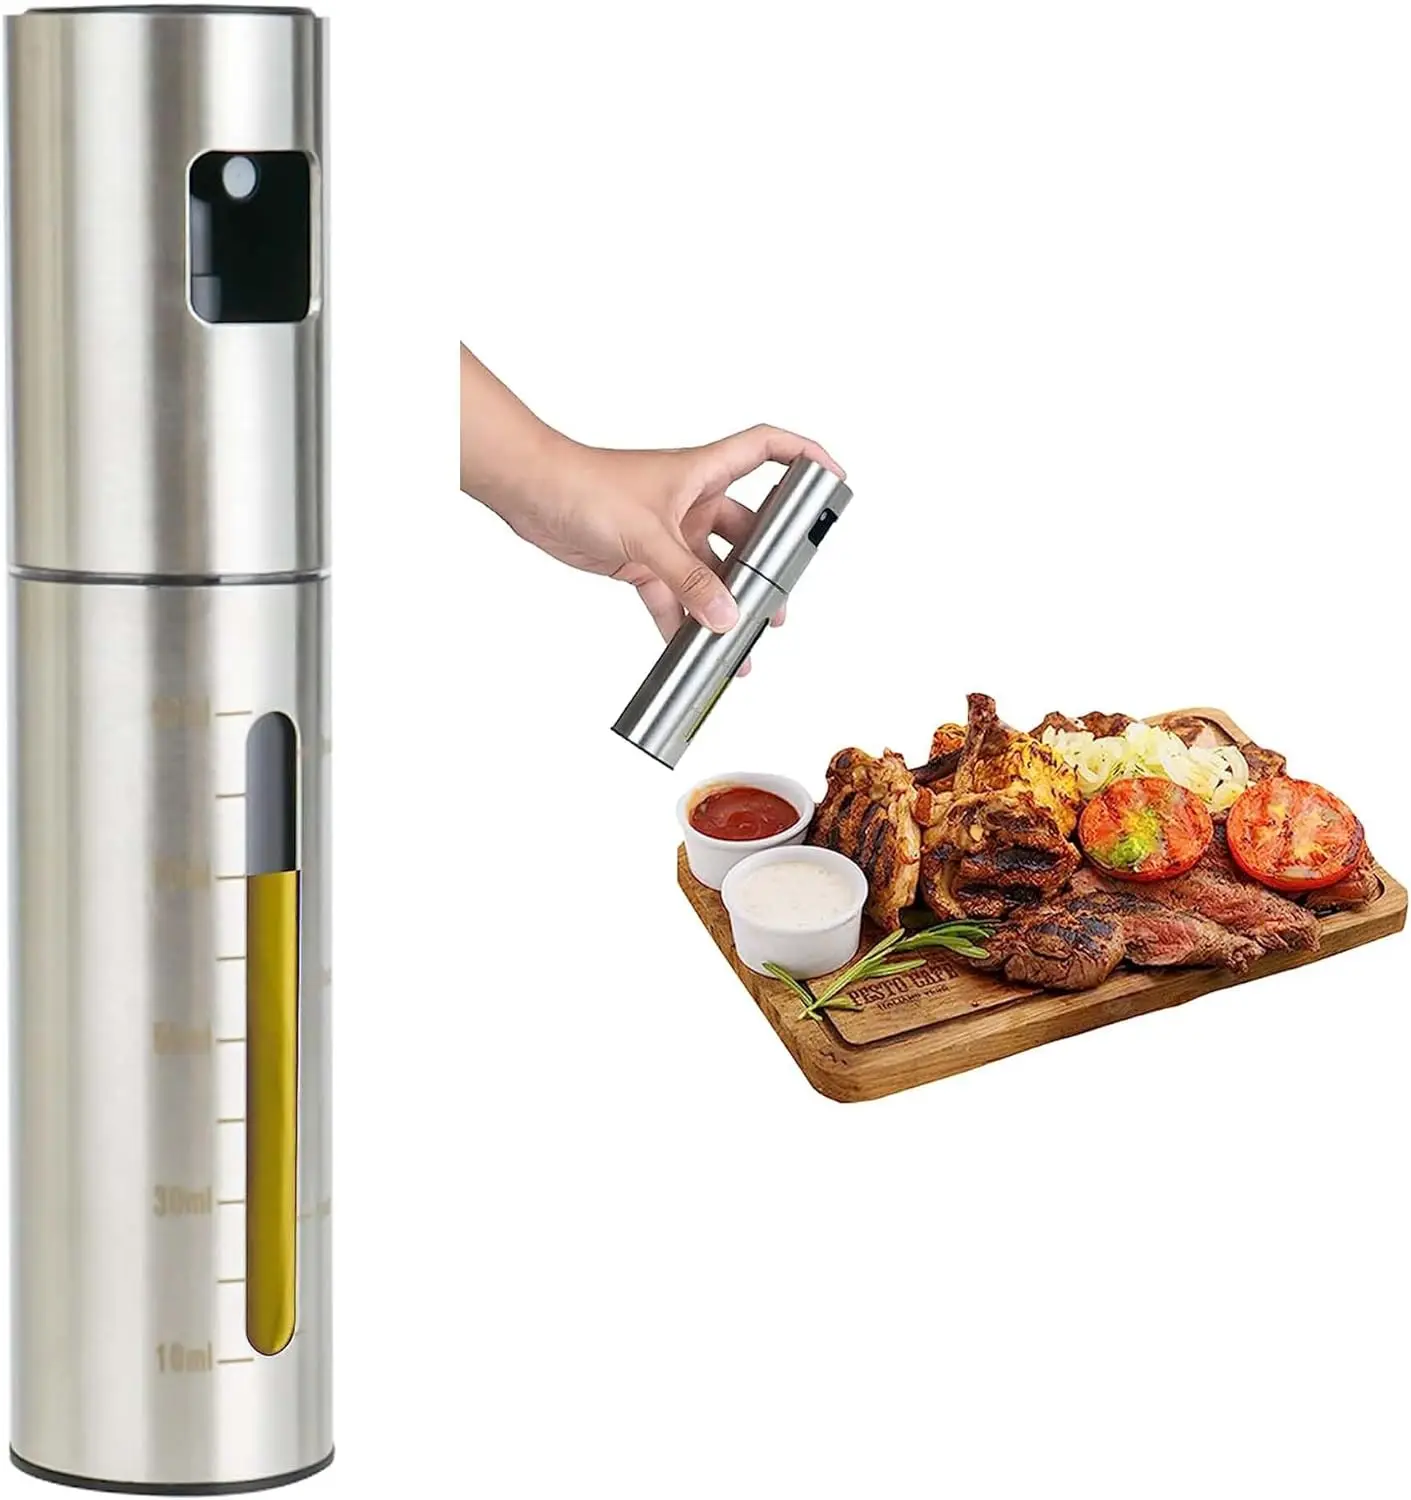 90ml Olive Oil Spritzer Sprayer Bottle Premium Oil Sprayer Kitchen Gadgets Accessories Widely Used for Barbecues Kitchen Baking